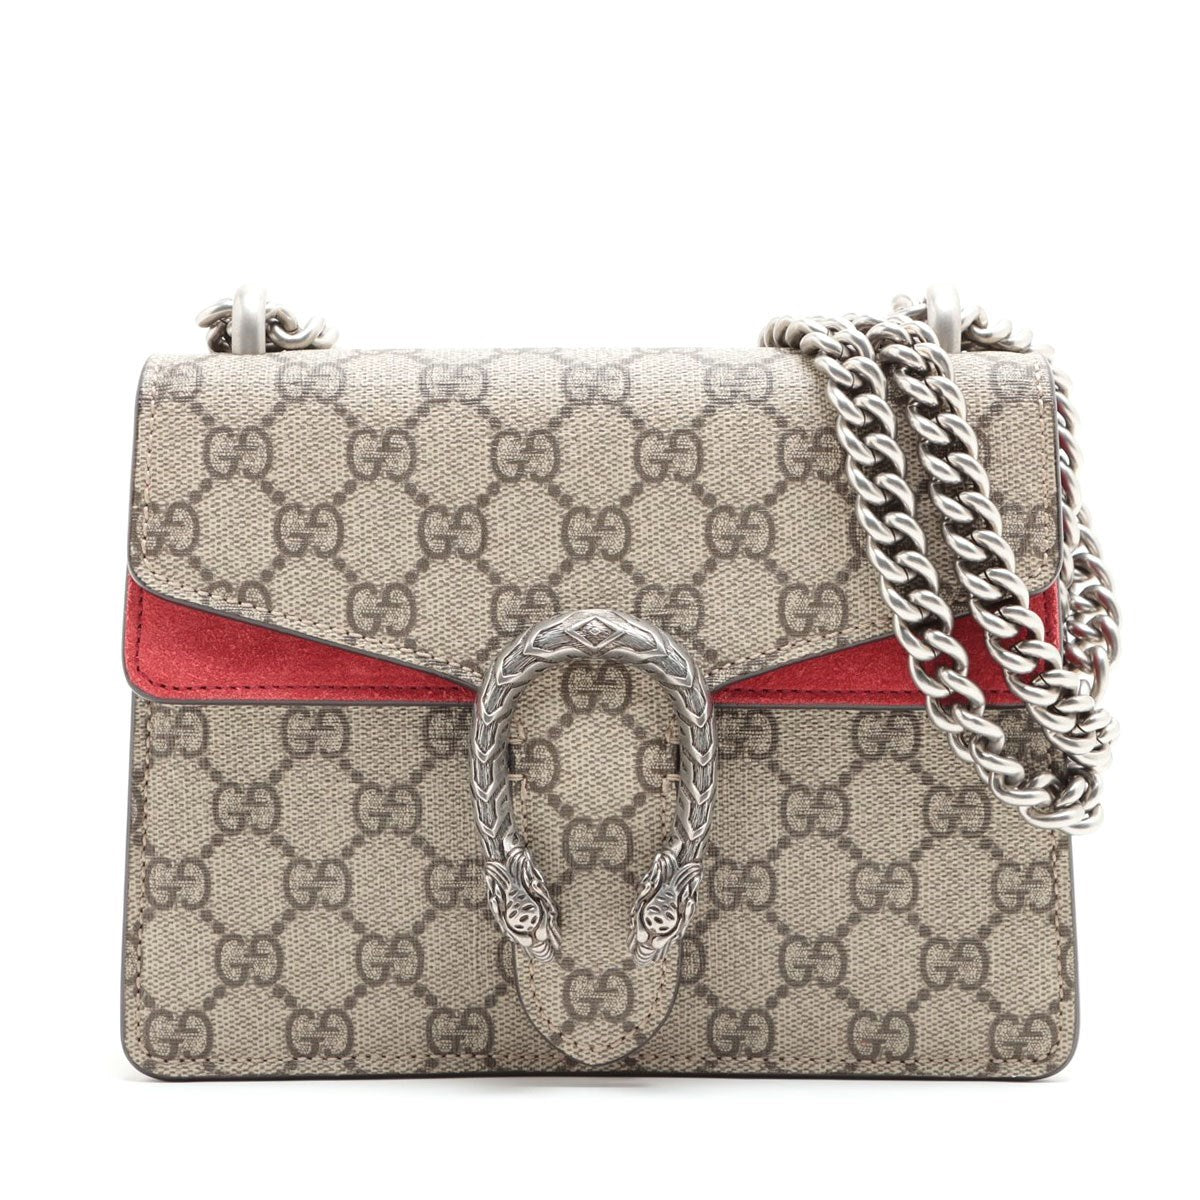 Gucci GG Supreme Dionysus PVC & leather Chain shoulder bag Beige 421970